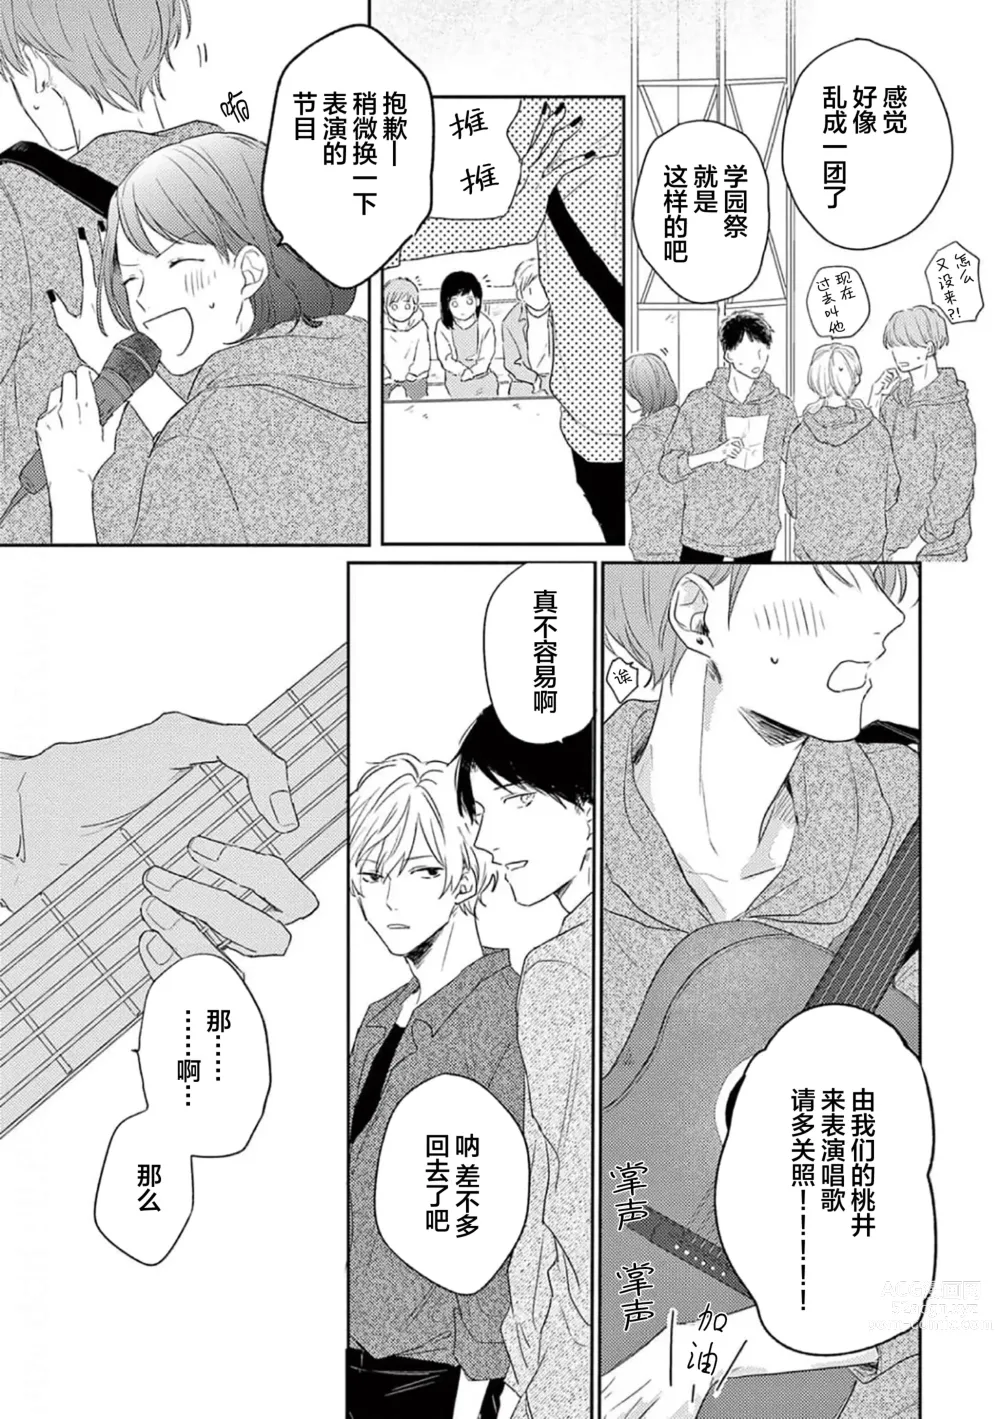 Page 12 of manga 直到这曲恋歌结束为止